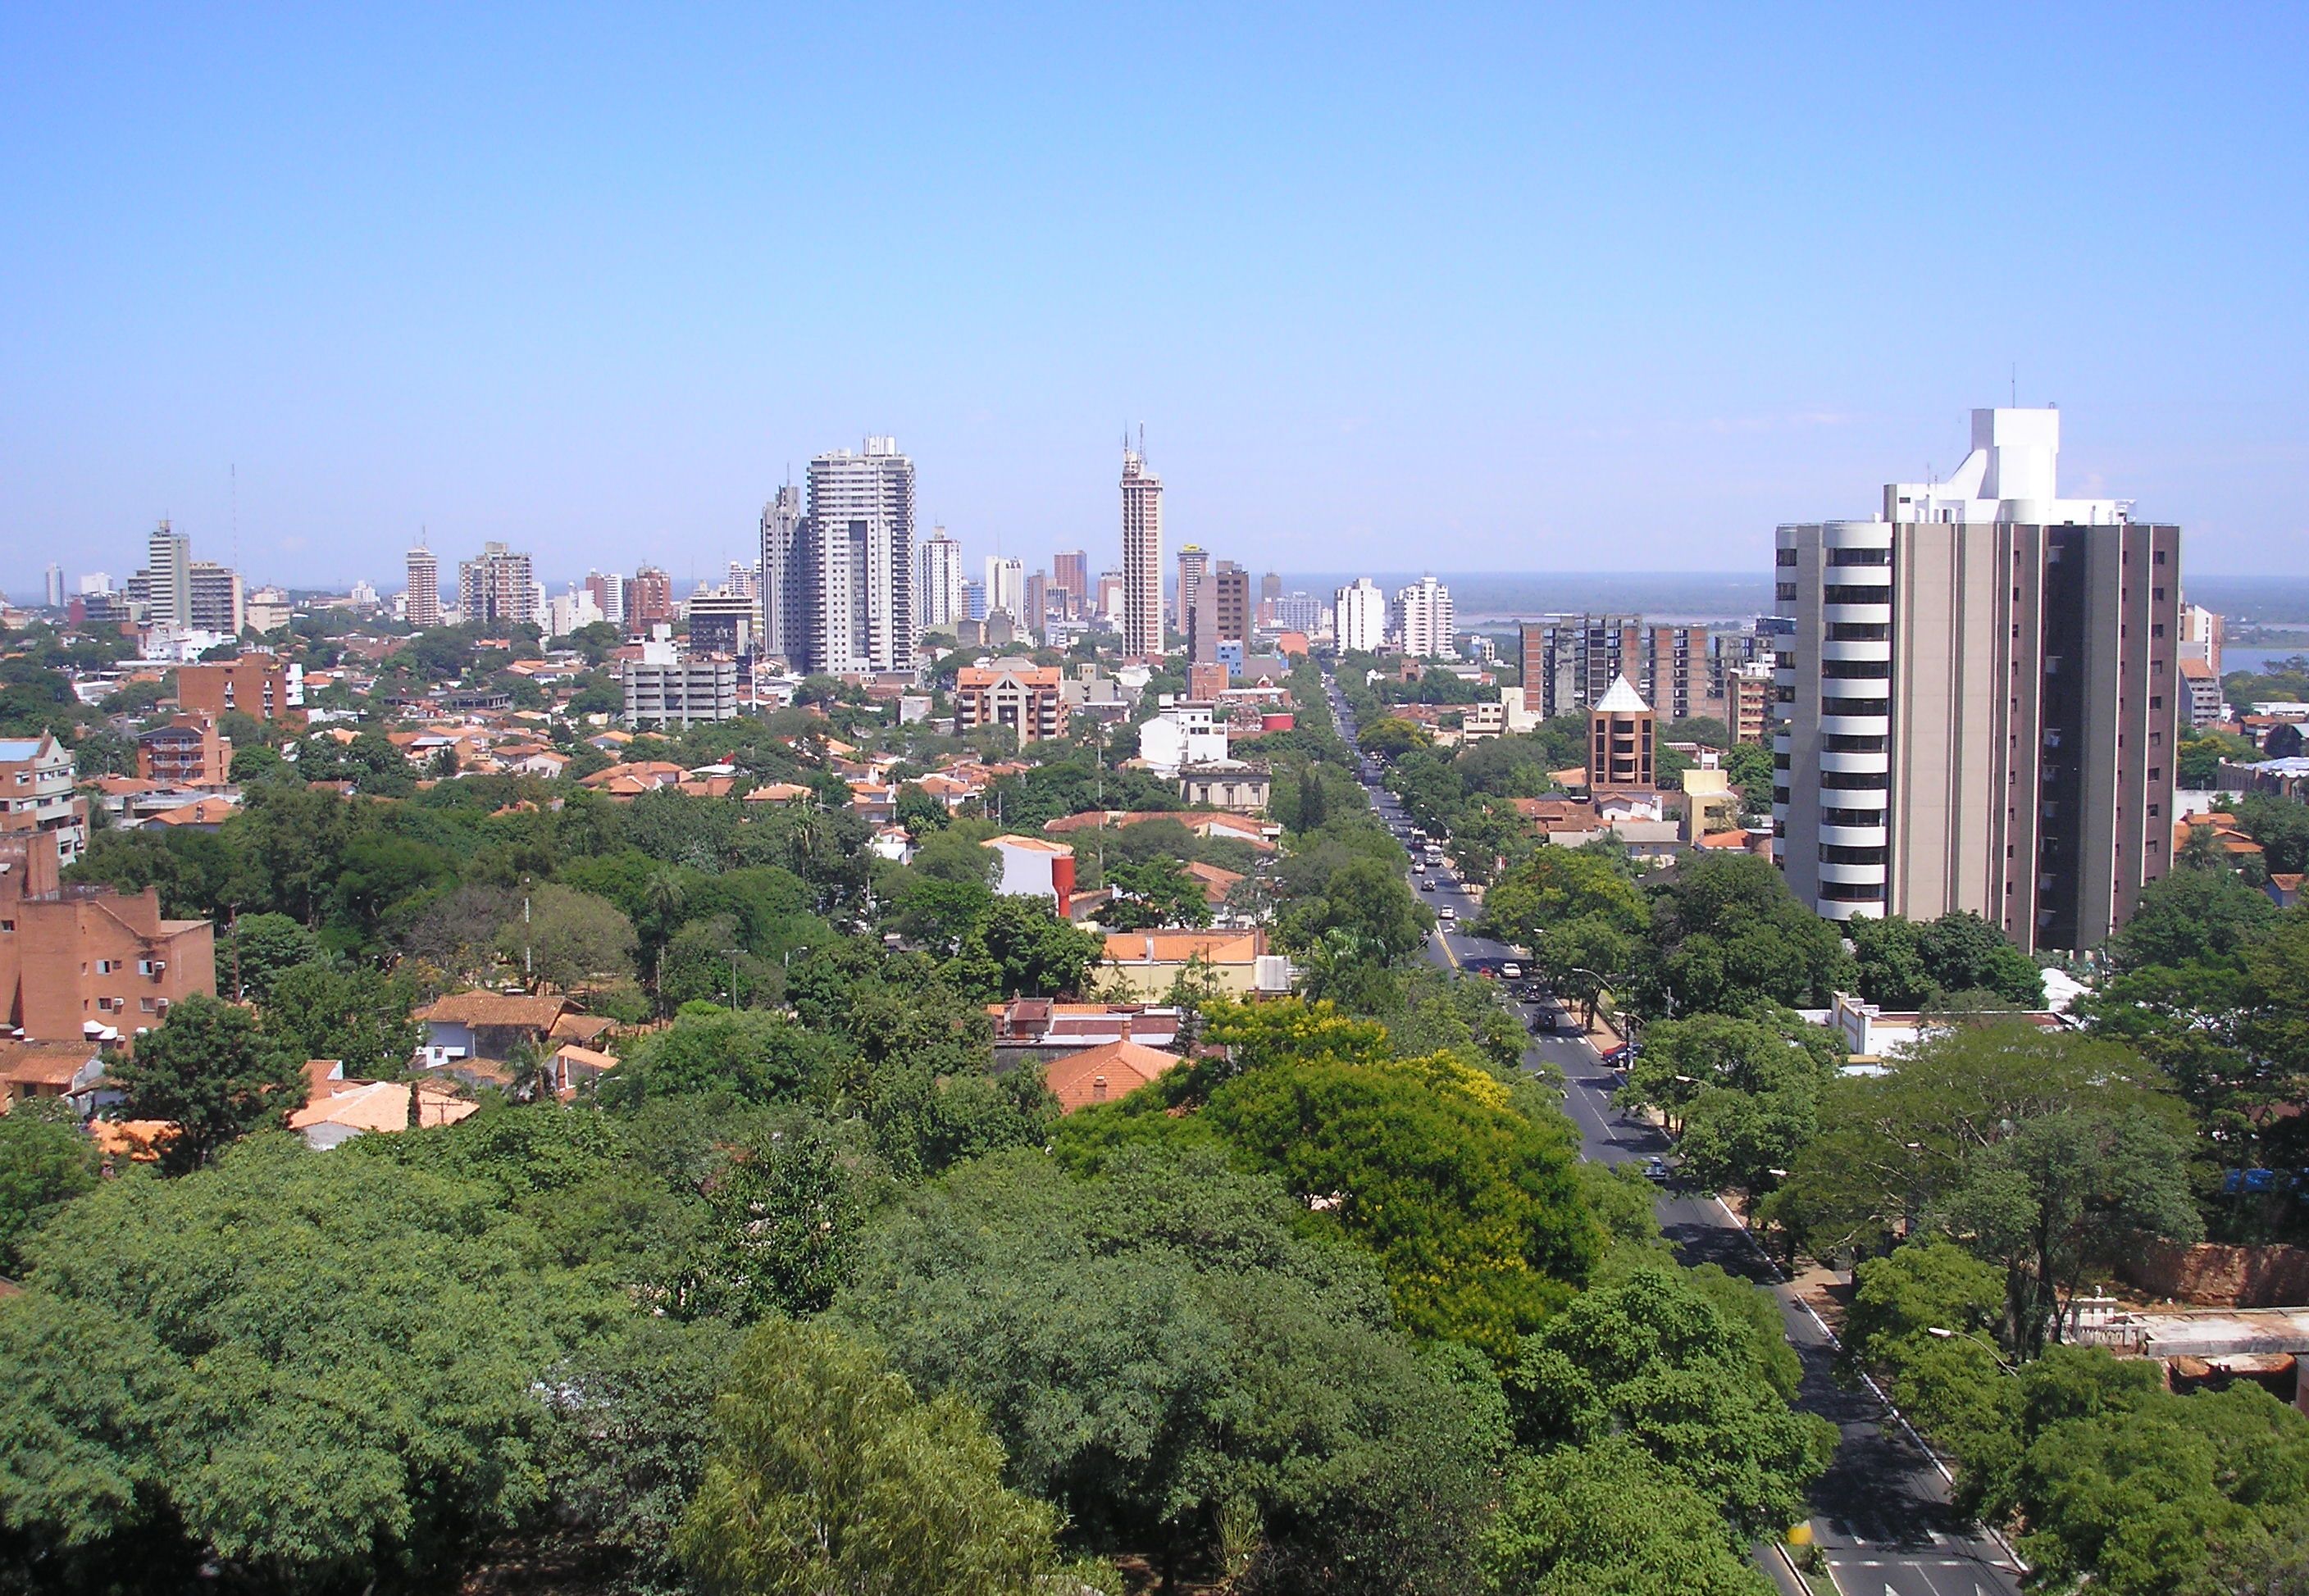 File:CAPITAL DE PARAGUAY.jpg - Wikimedia Commons